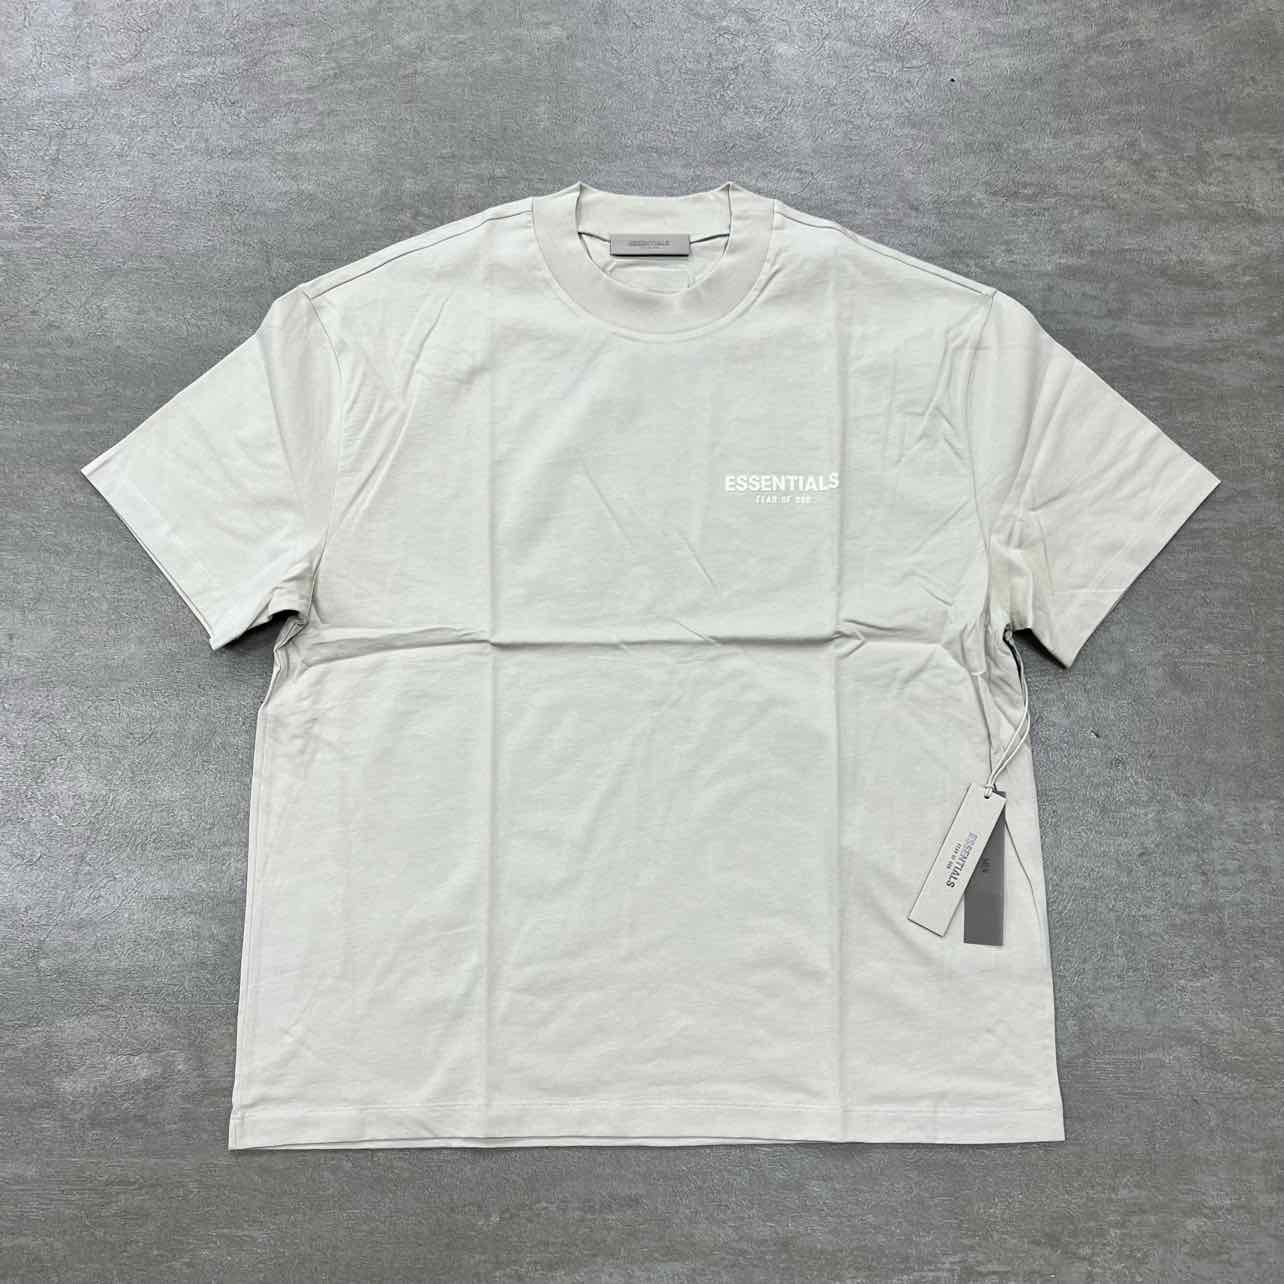 Fear of God T-Shirt "ESSENTIALS" Wheat New Size XS